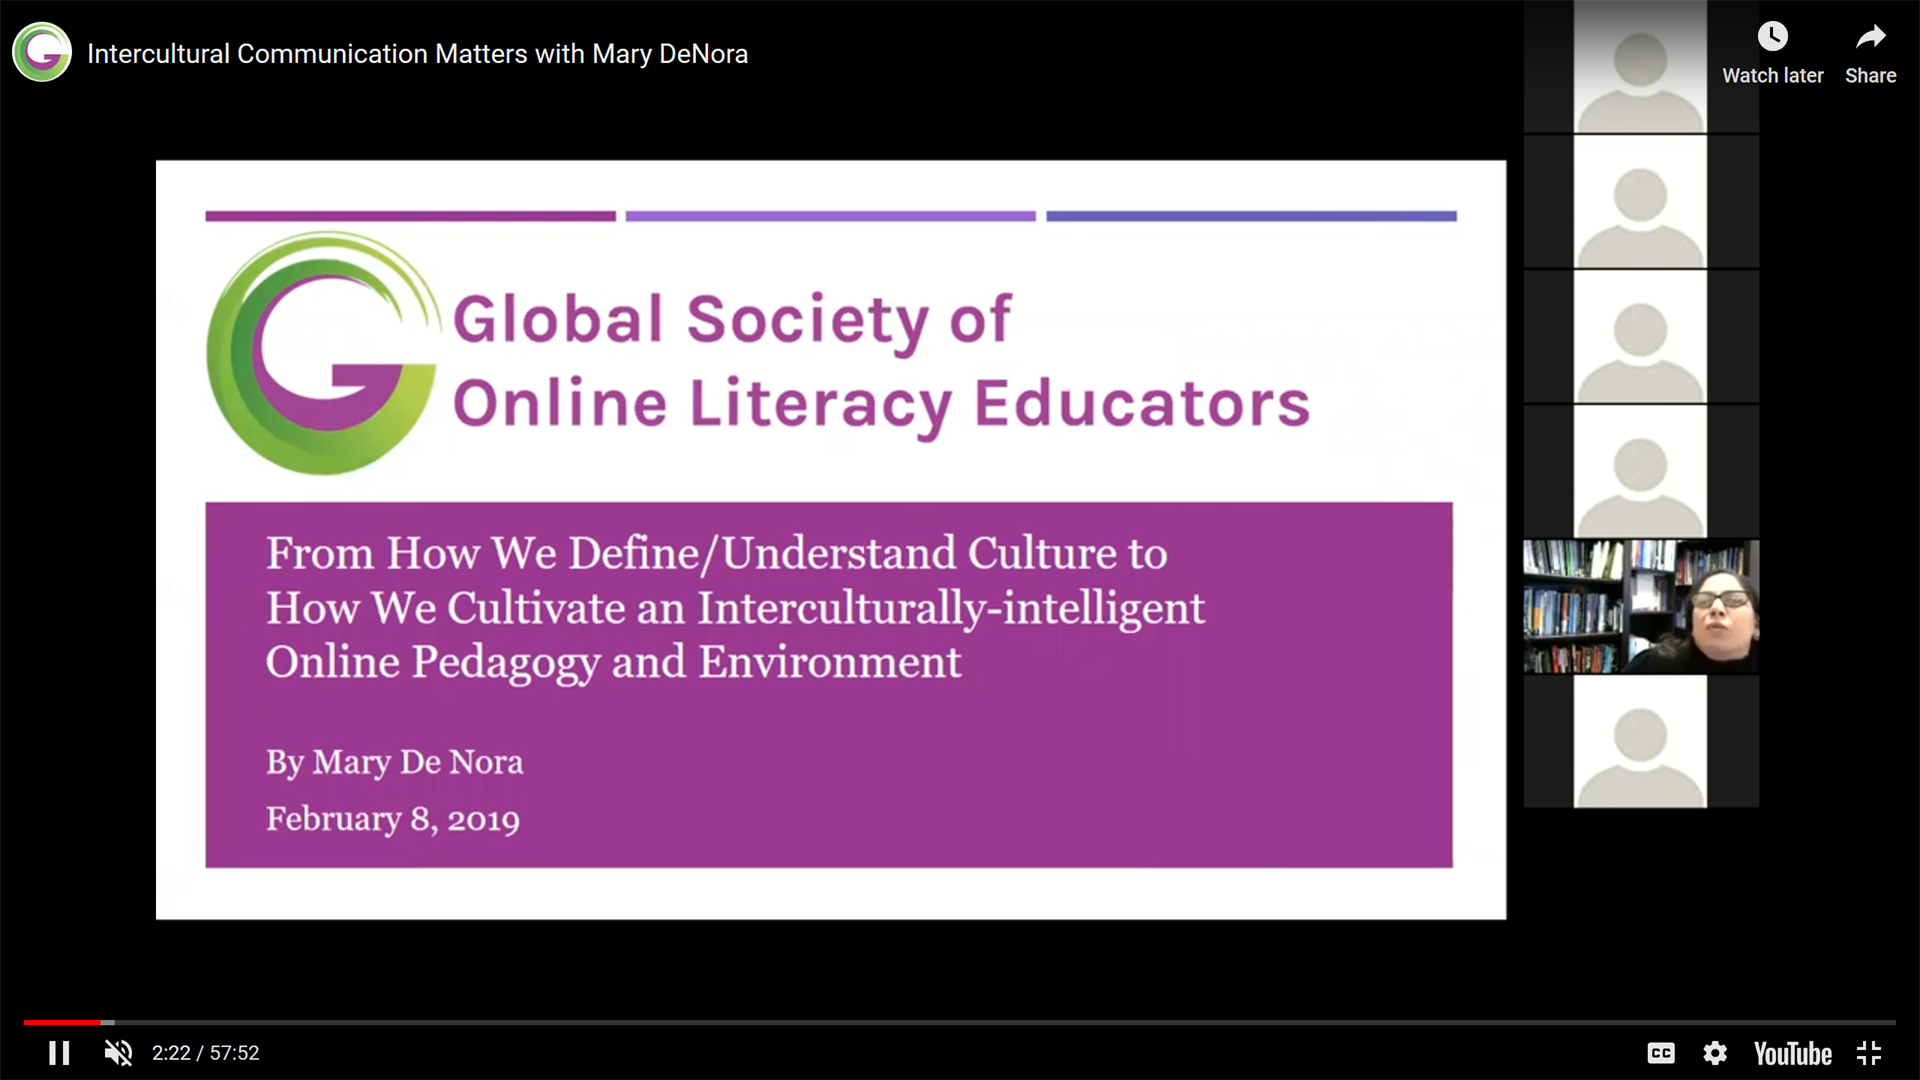 Webinar Screen Capture: Slide title "Global Society of Online Literacy Educators. Welcome to the 2019-2019 Webinar Series!"